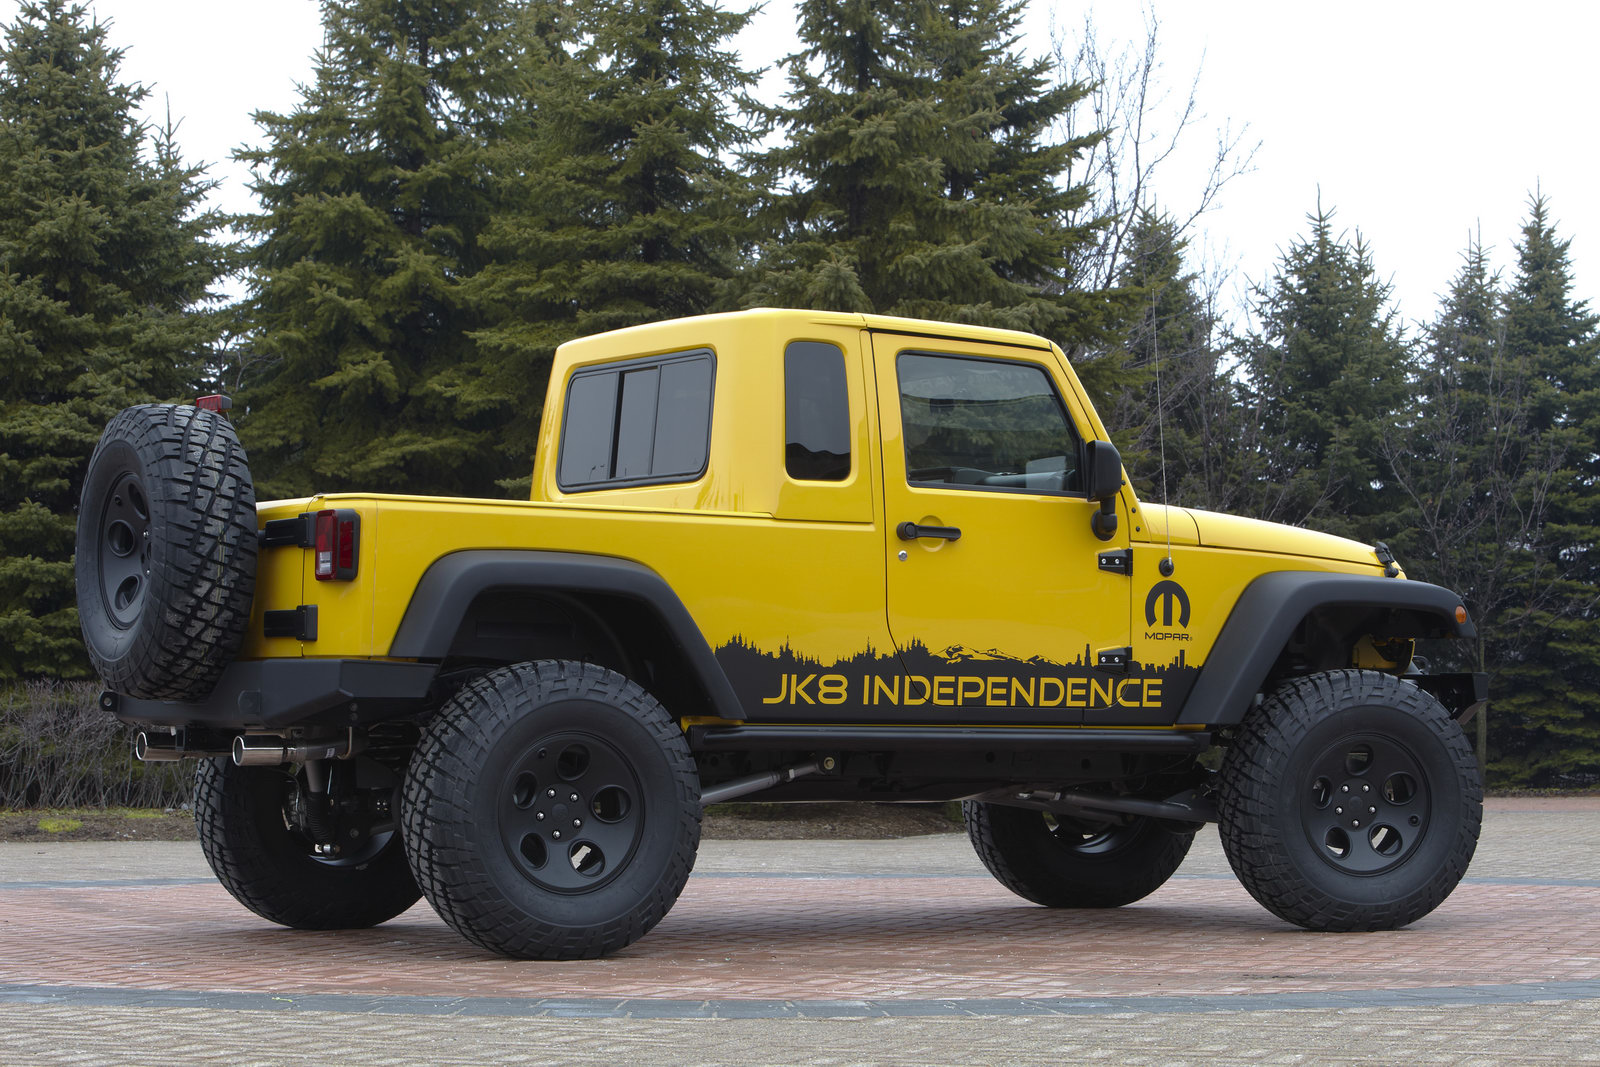 Jeep Wrangler JK8 Independence DIY Mopar Kit Allows Owners To Turn